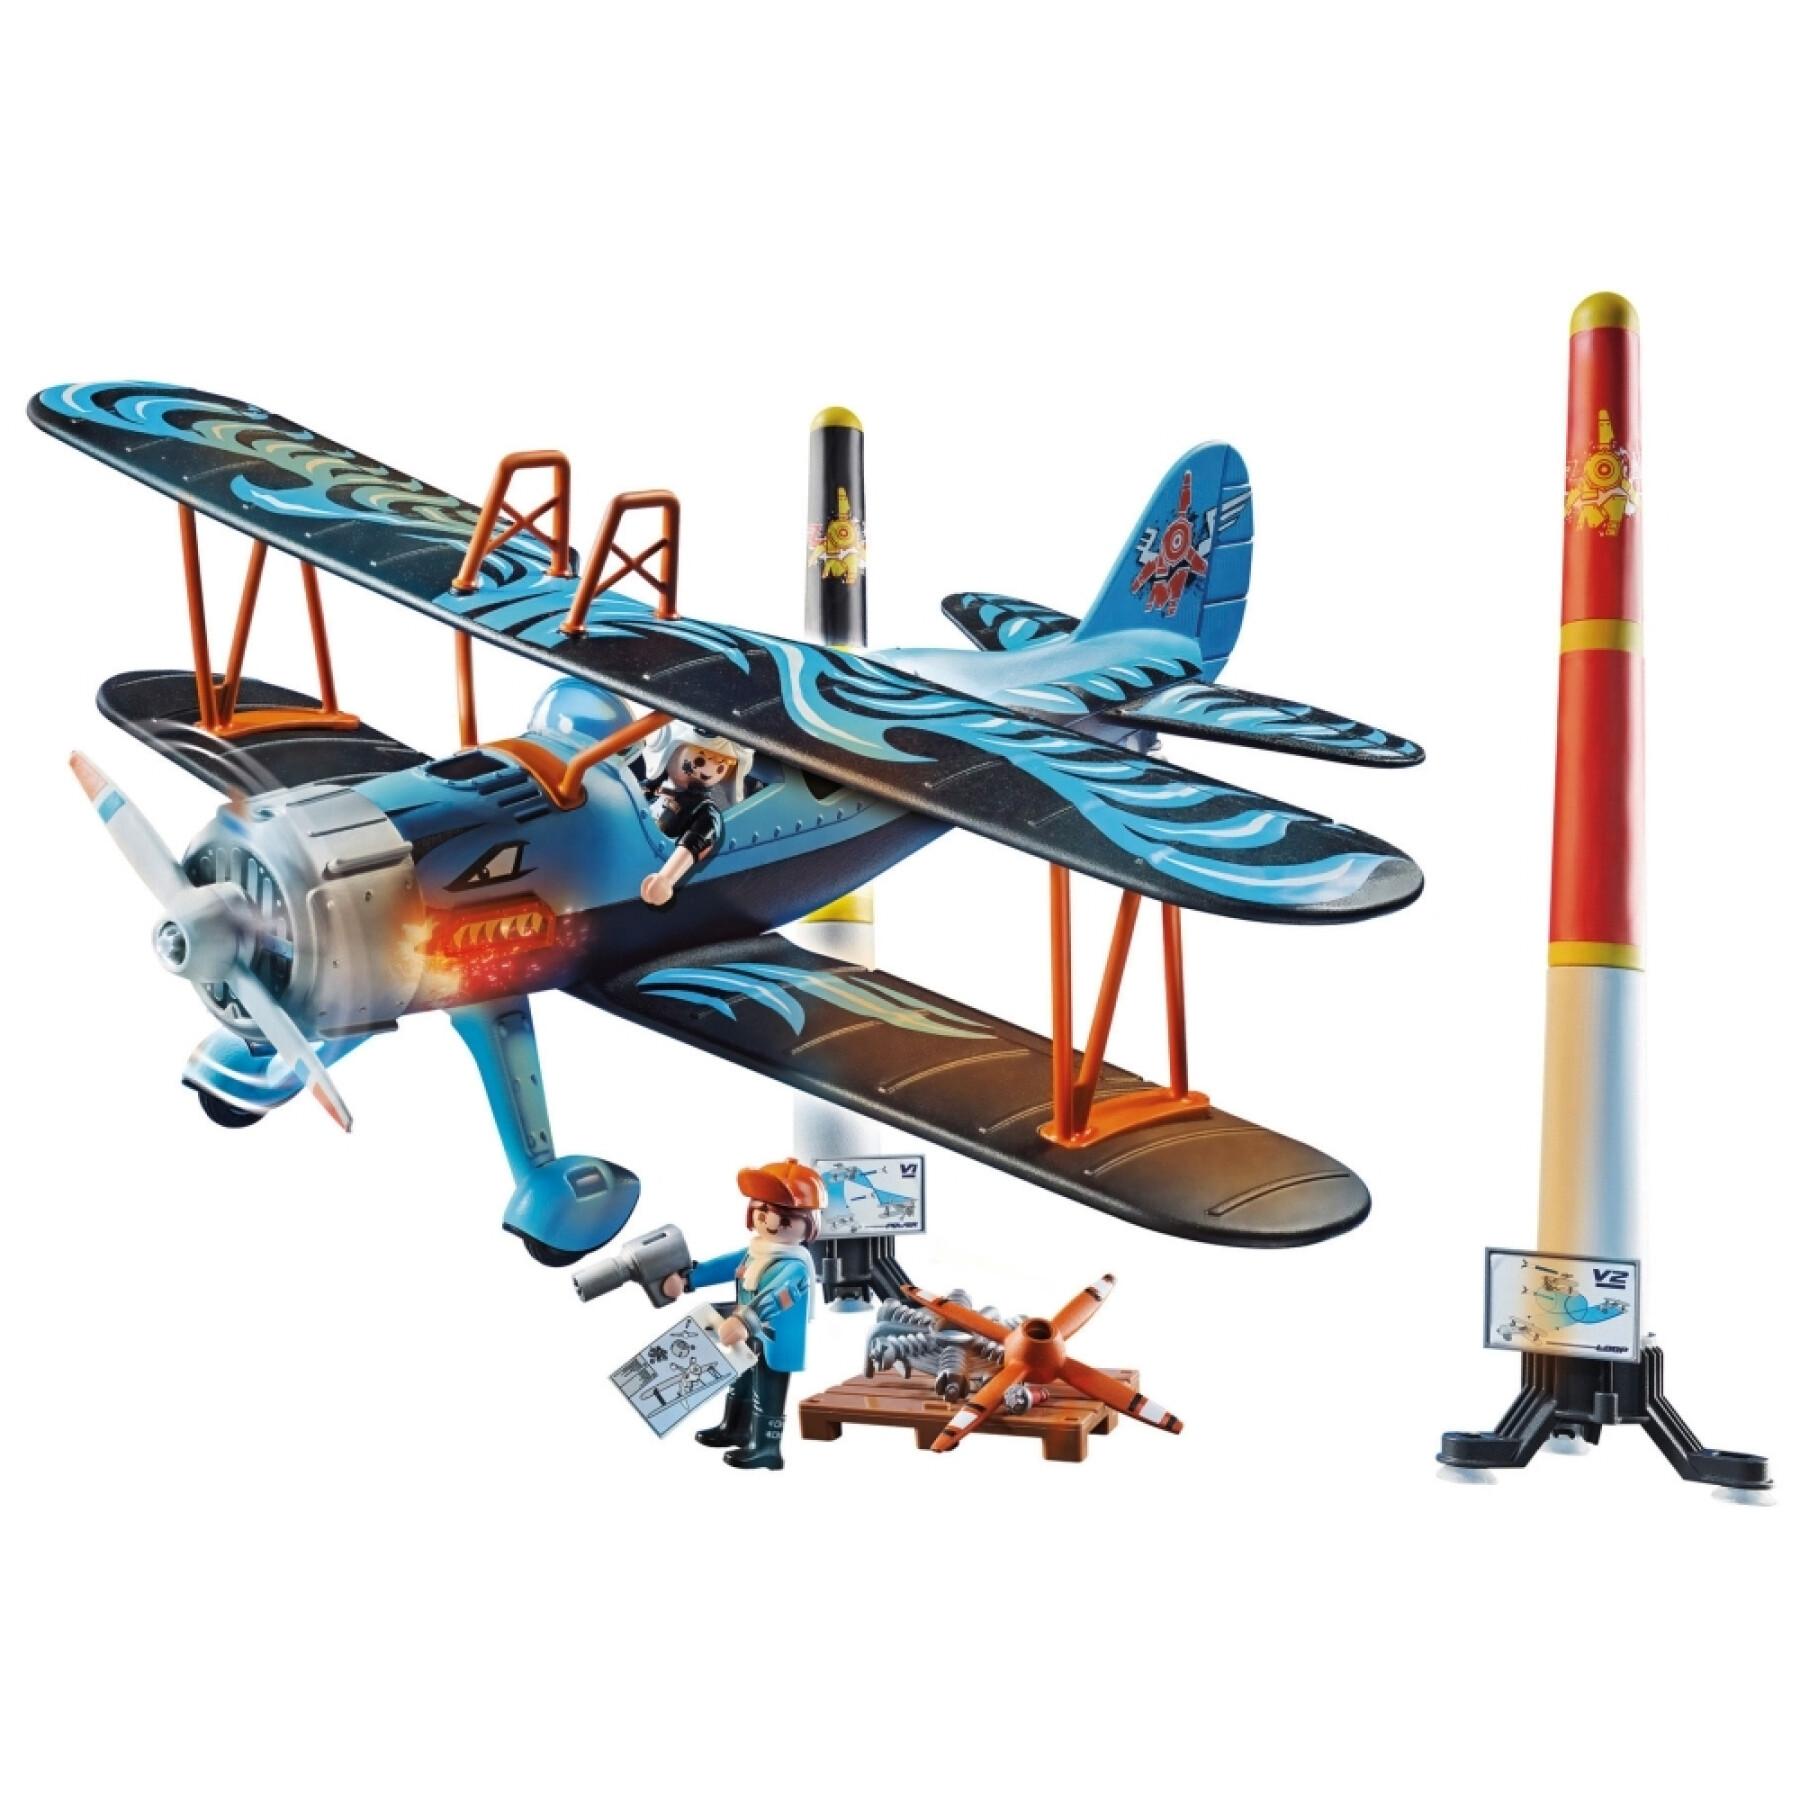 Airplane toy Playmobil Stuntshow Biplano Phoenix